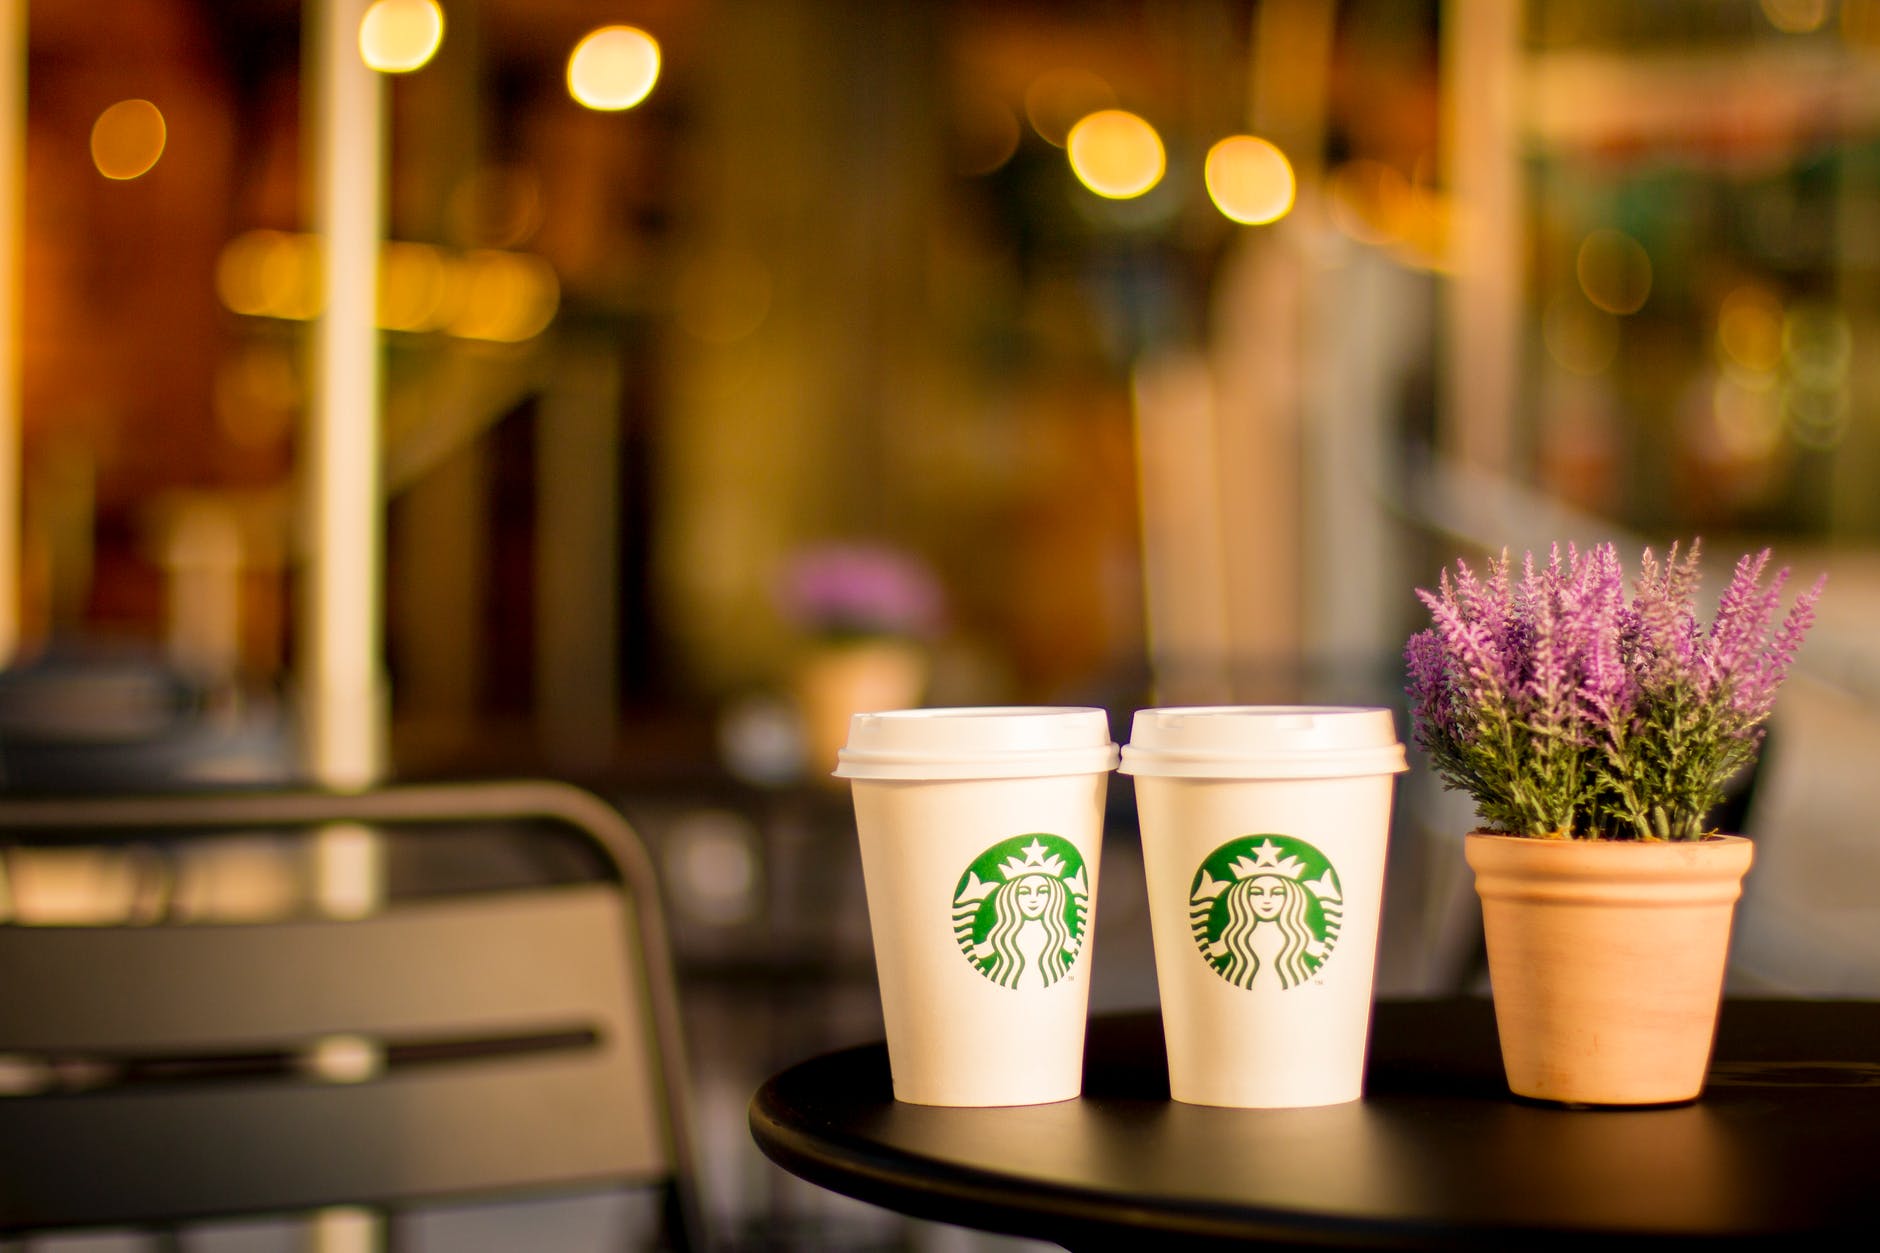 Les copines de Marissa attendaient au Starbucks. | Photo : Pexels